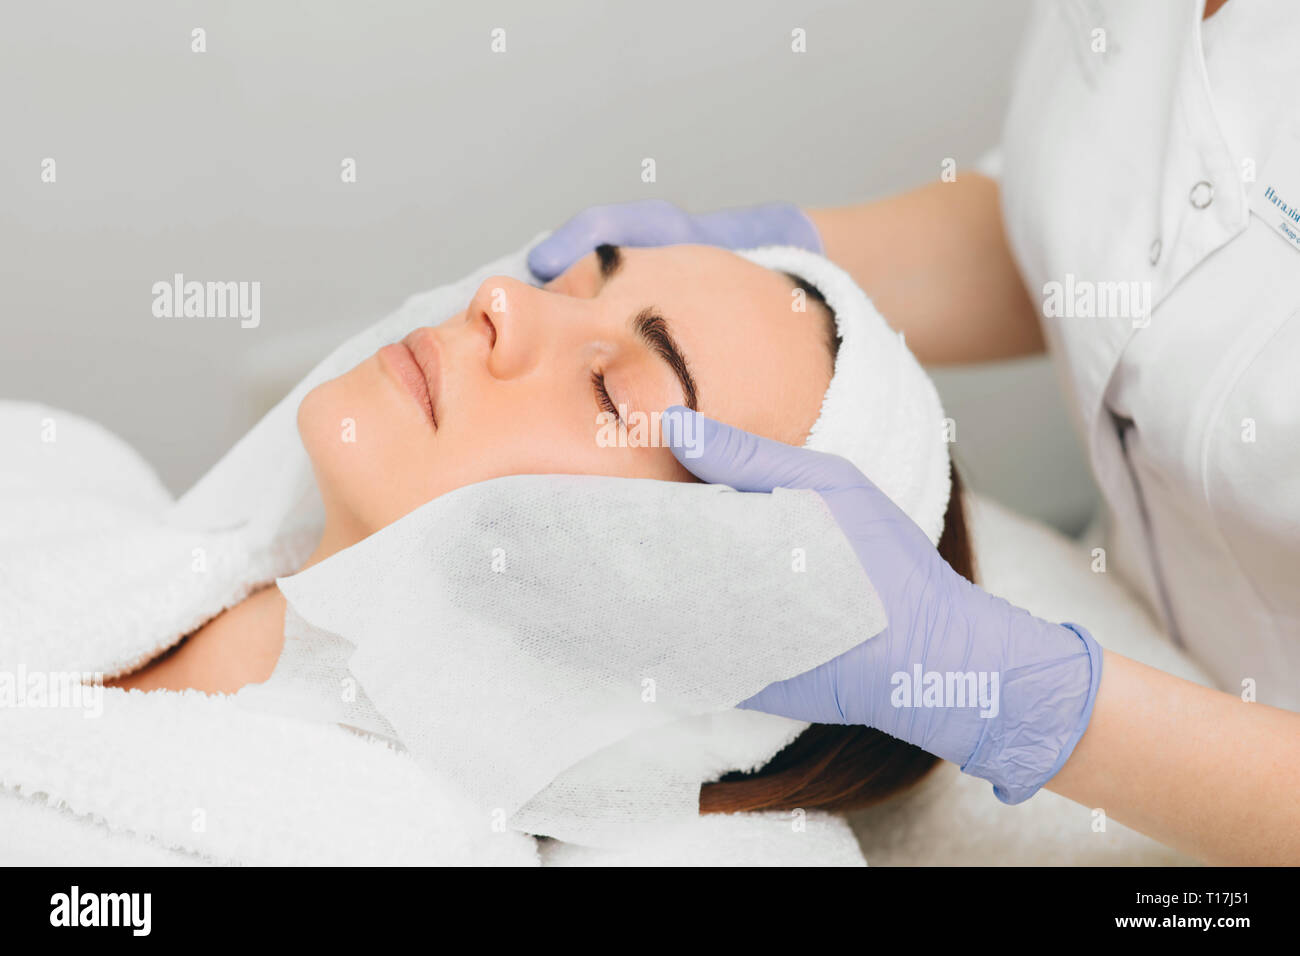 woman receiving facial treatment at beauty salon. Exfoliation Stock Photo